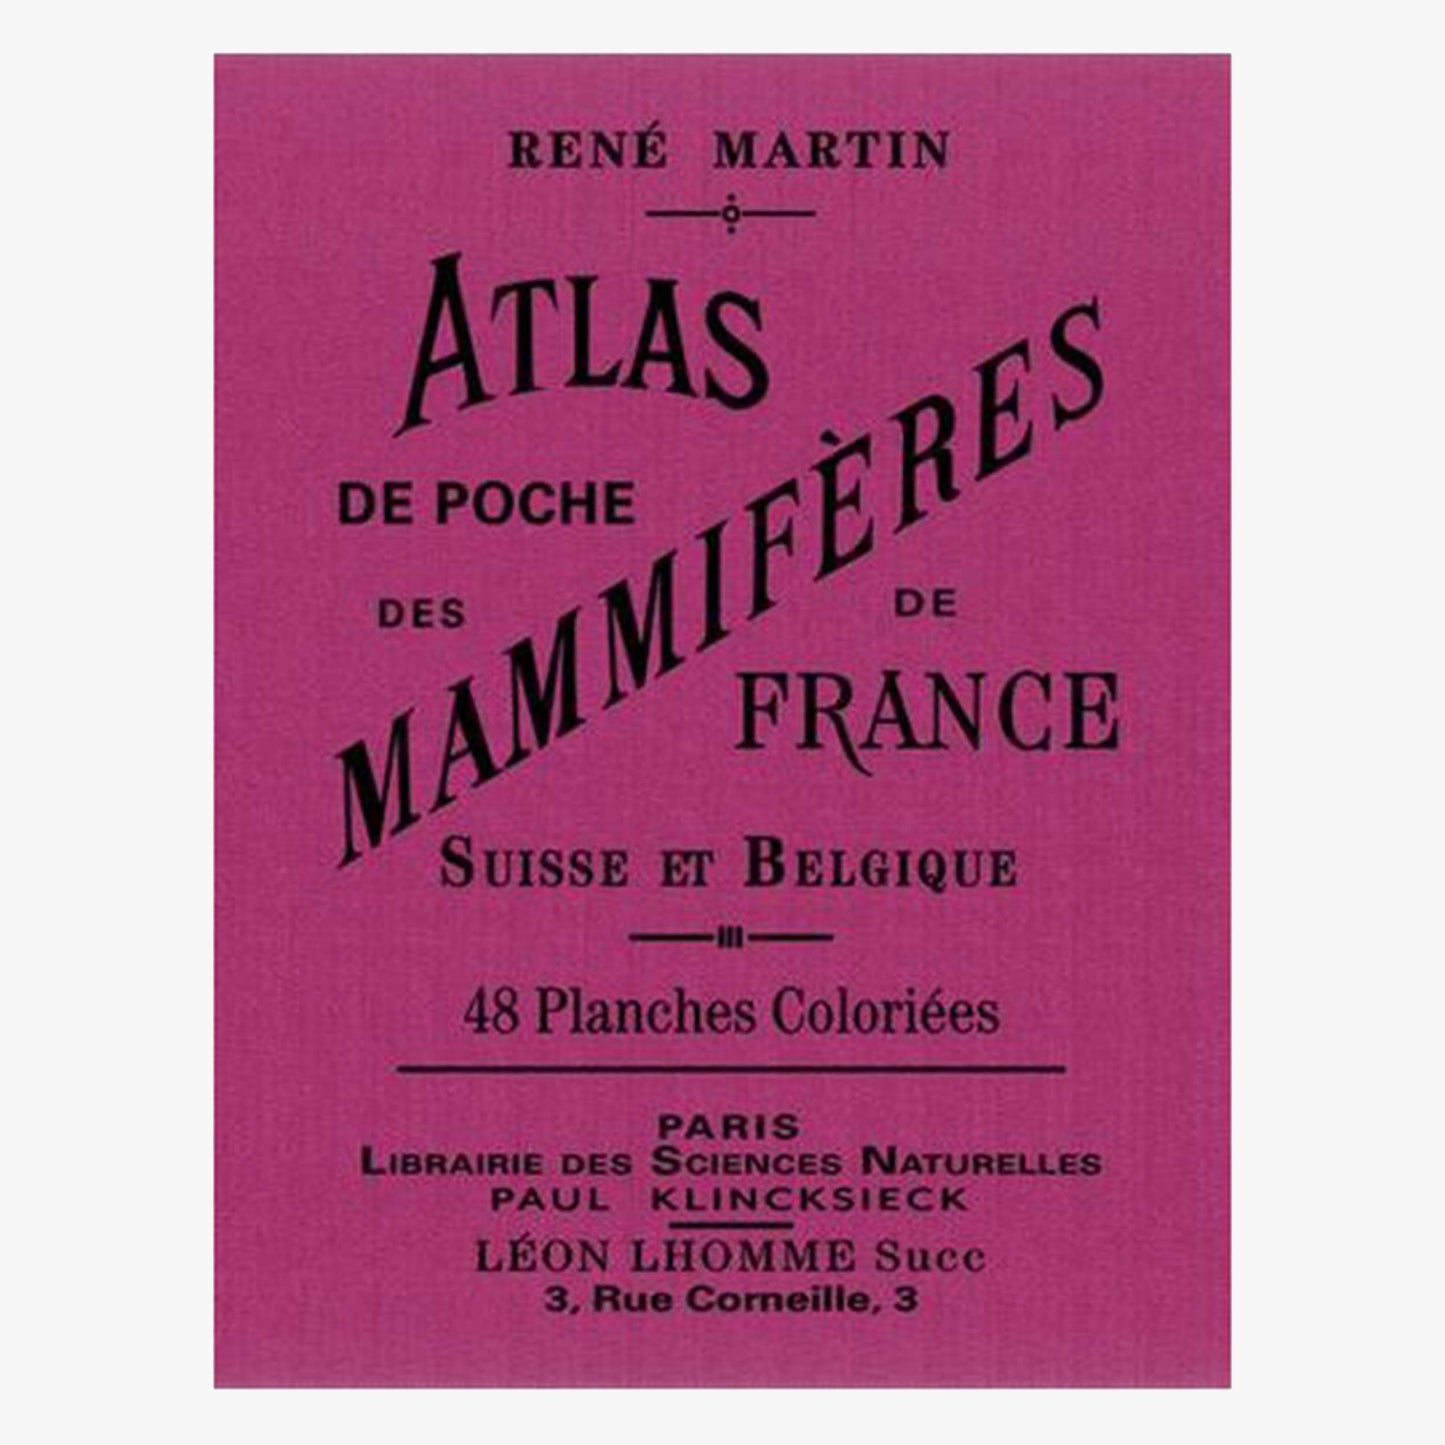 Atlas de poche des MAMMIFERES de France